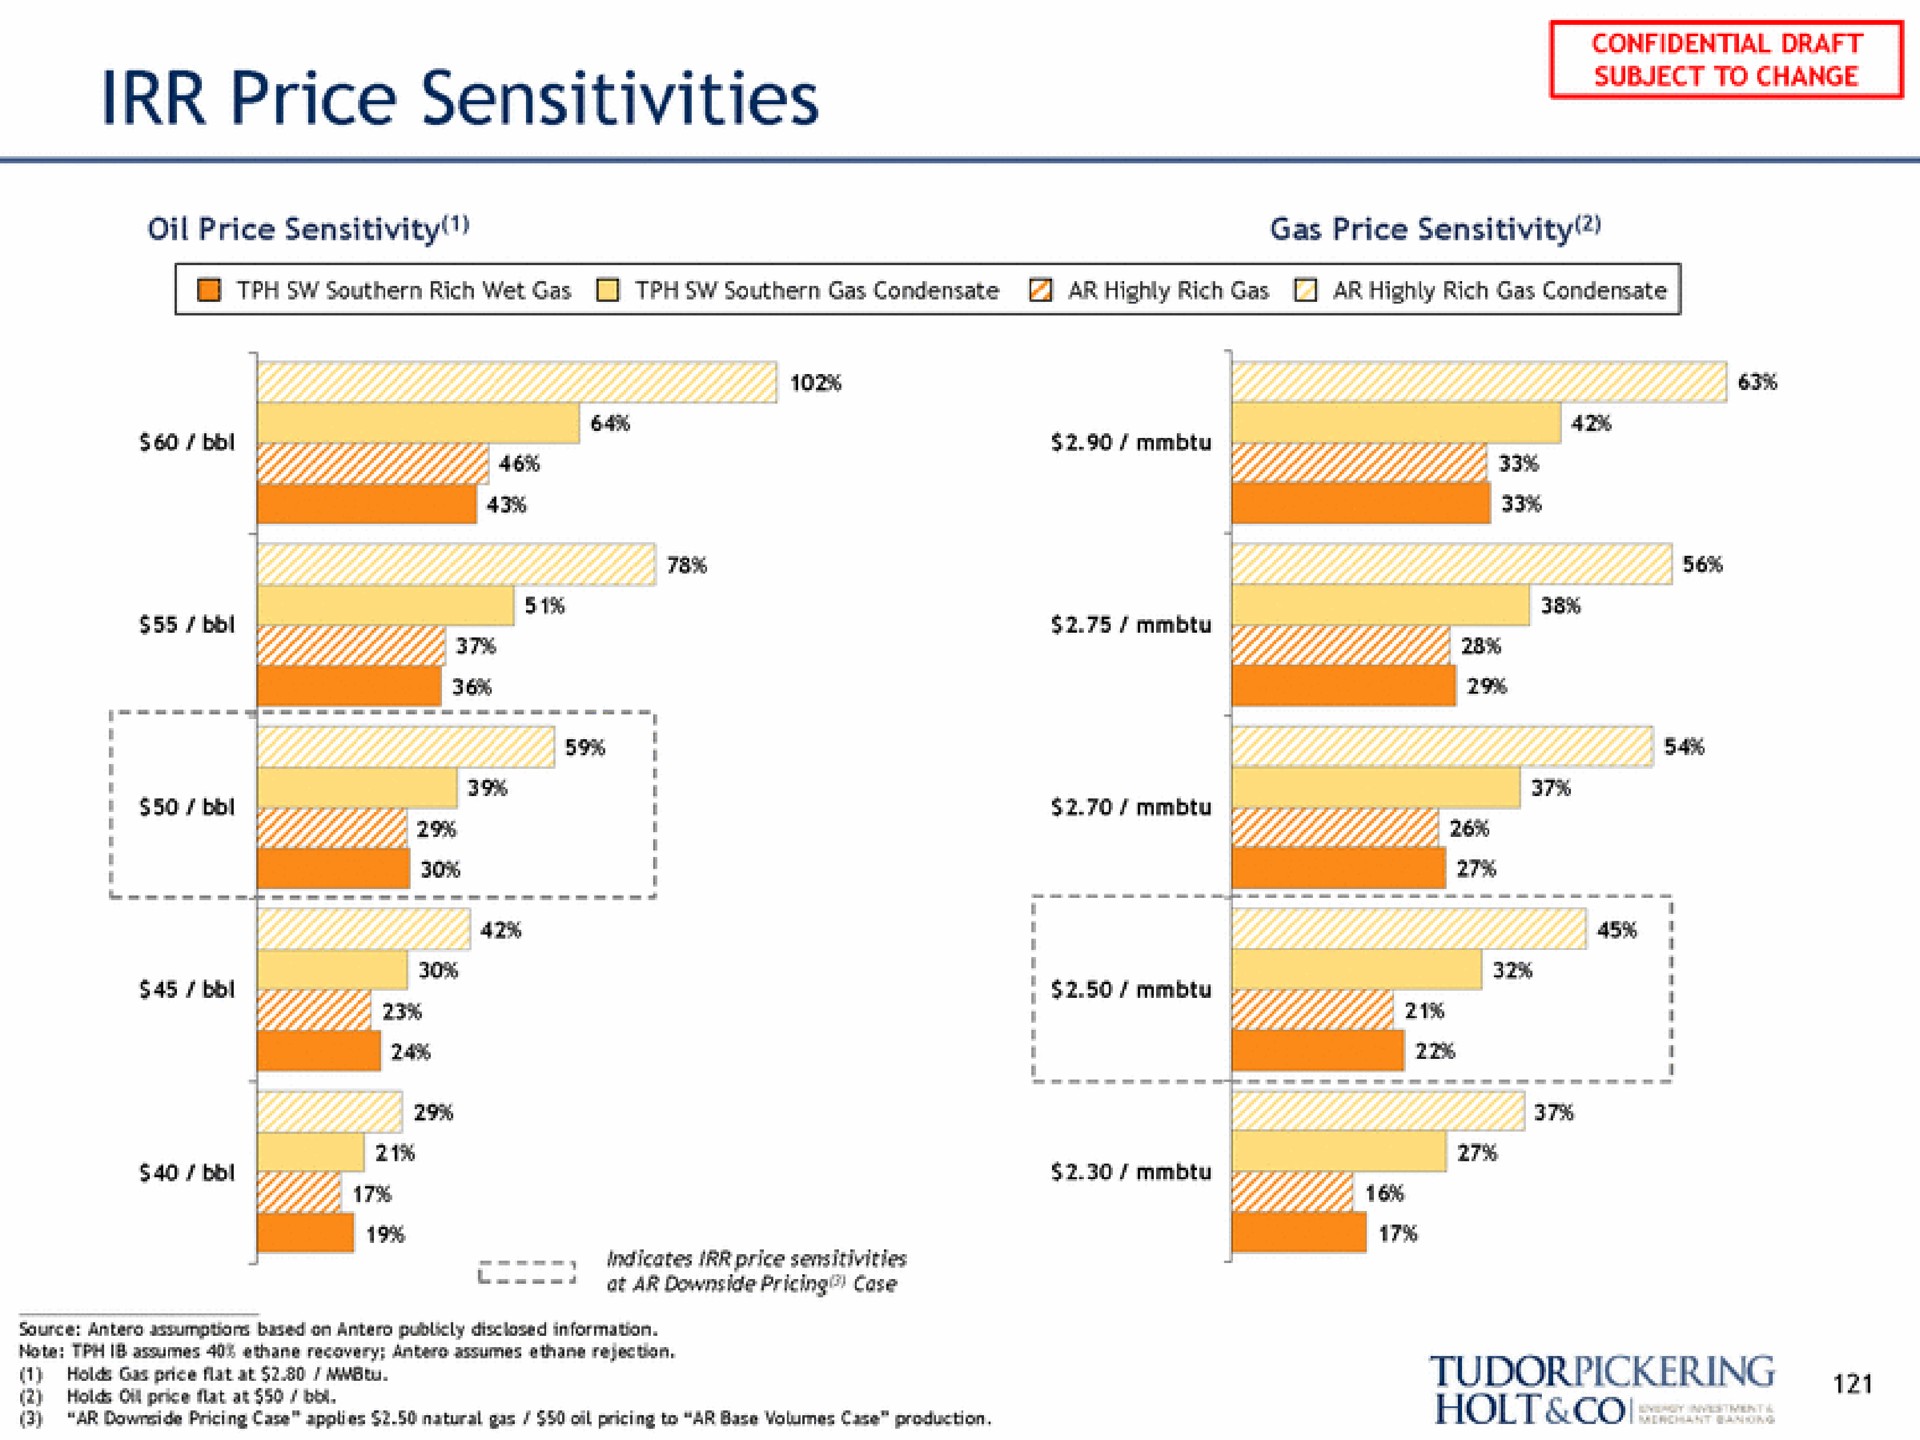 price sensitivities wha | Tudor, Pickering, Holt & Co